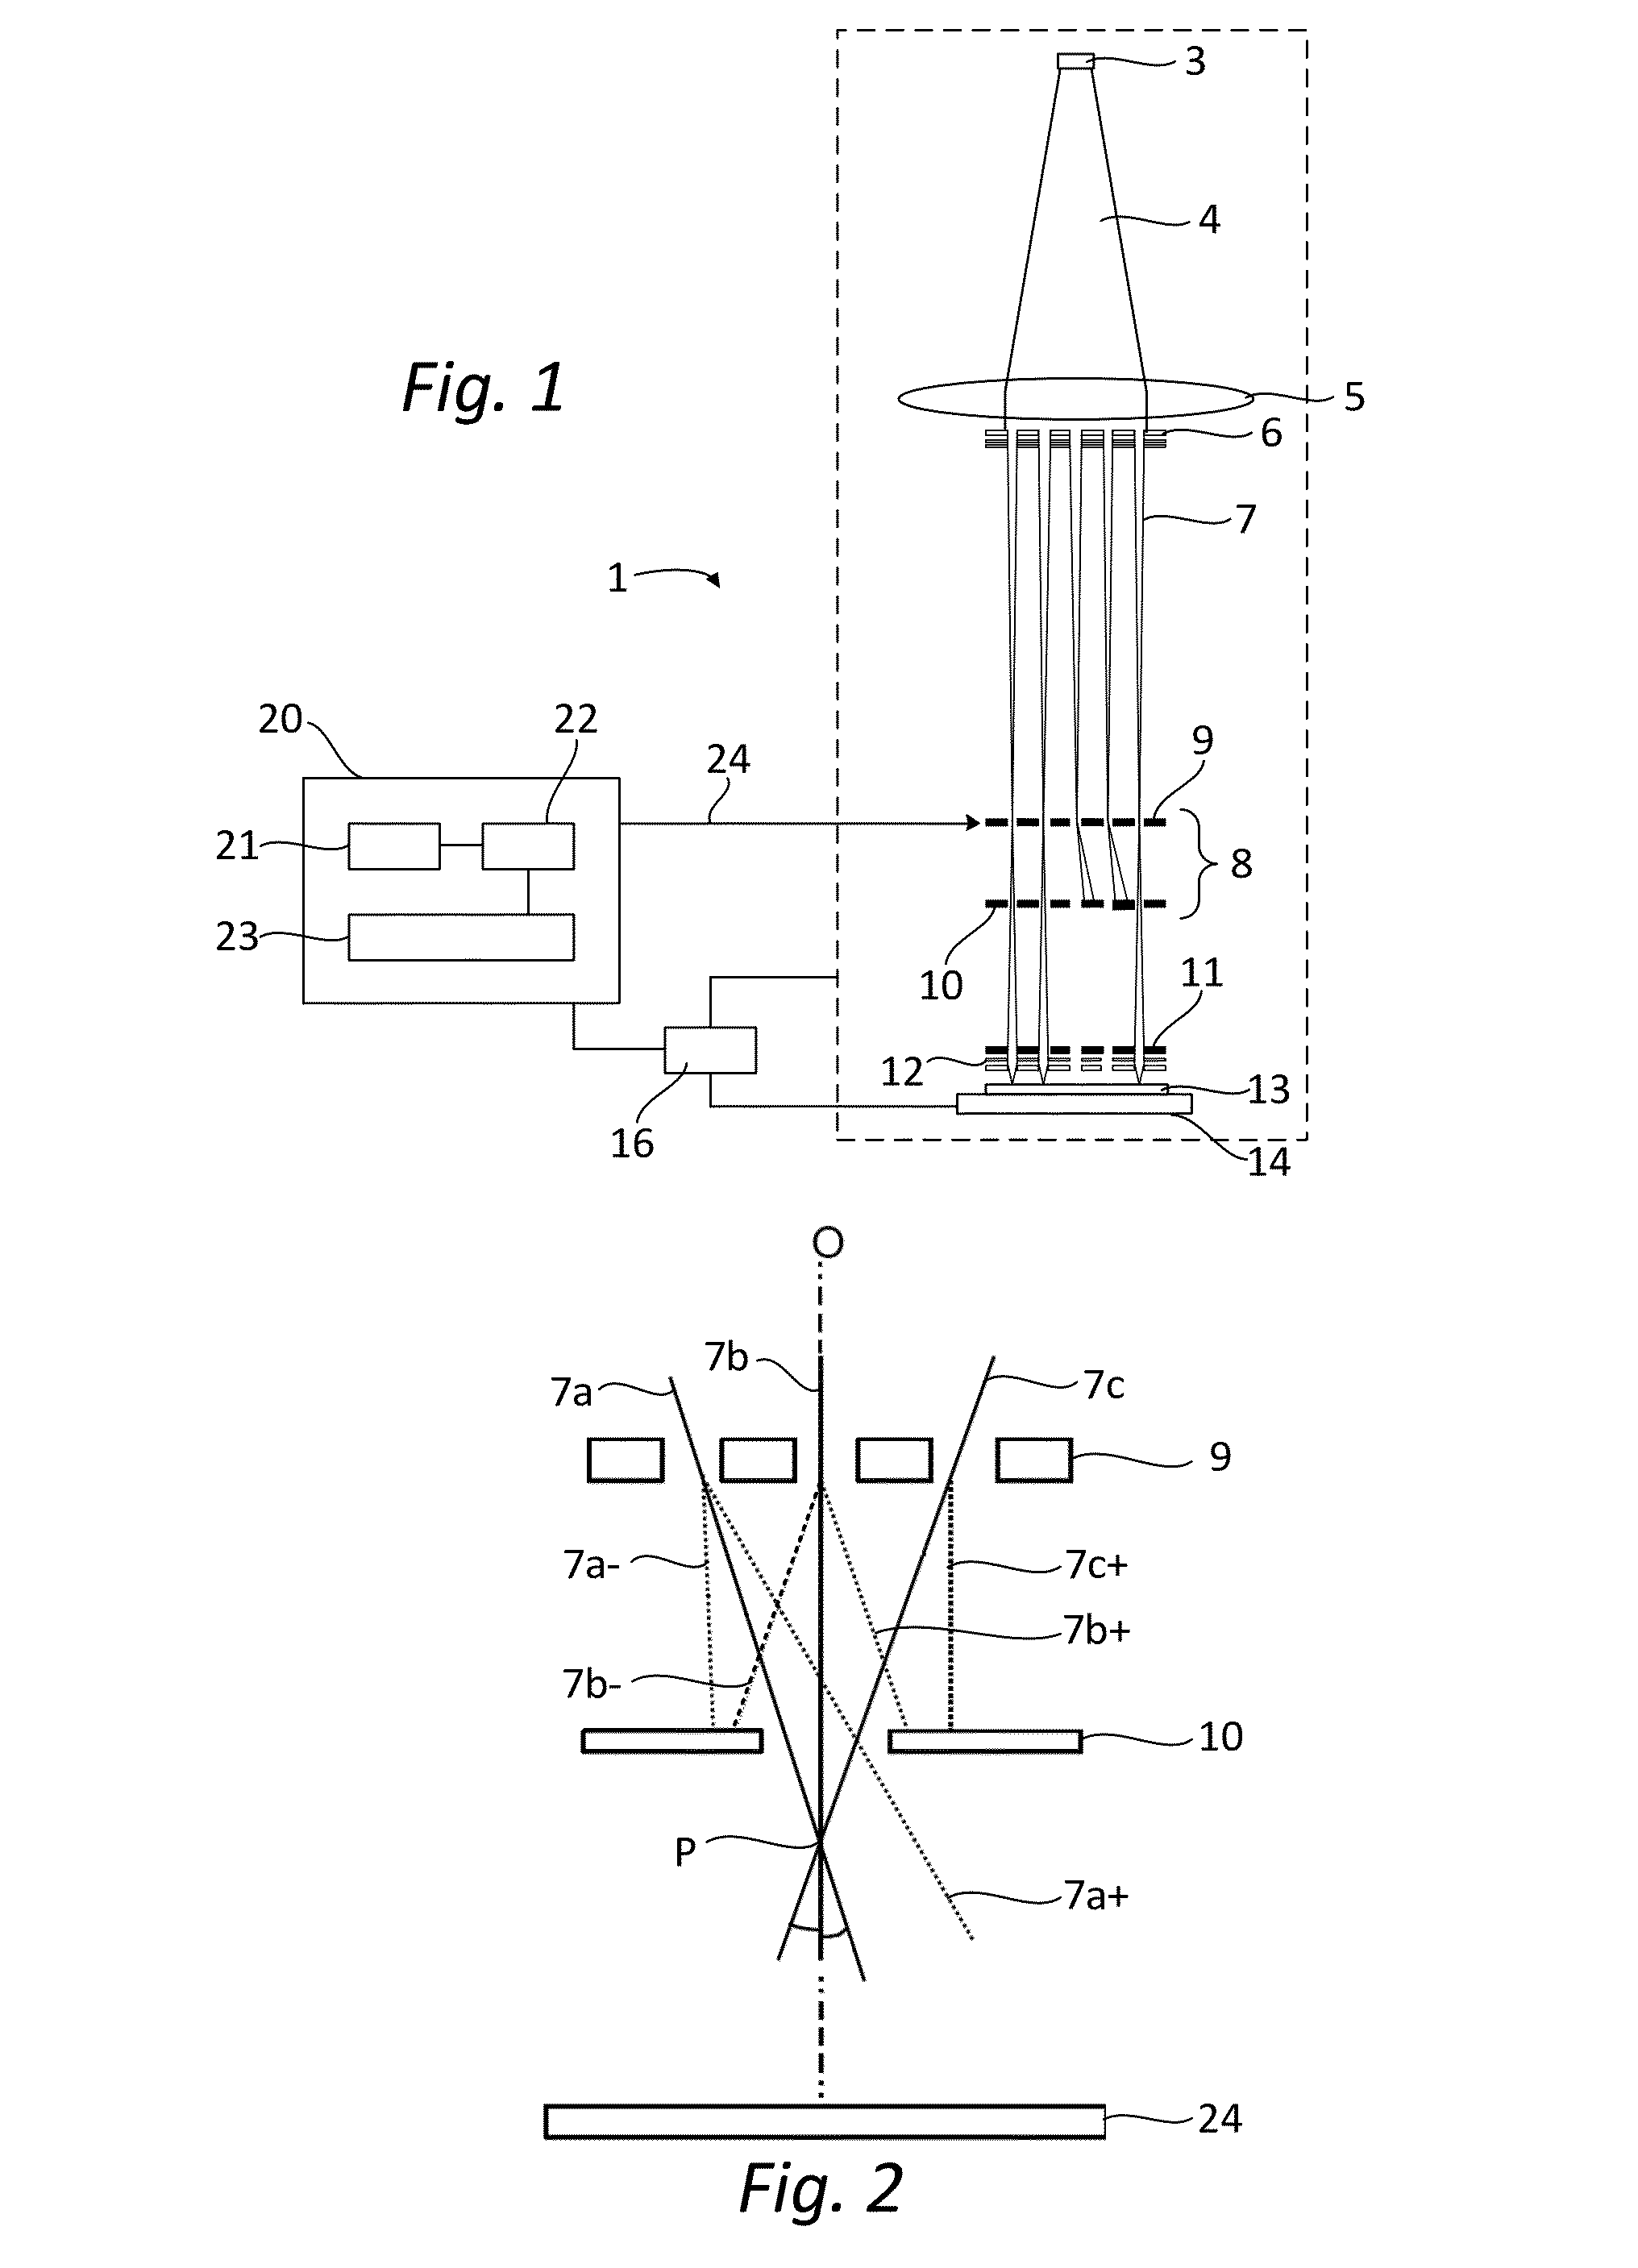 Method for forming an optical fiber array